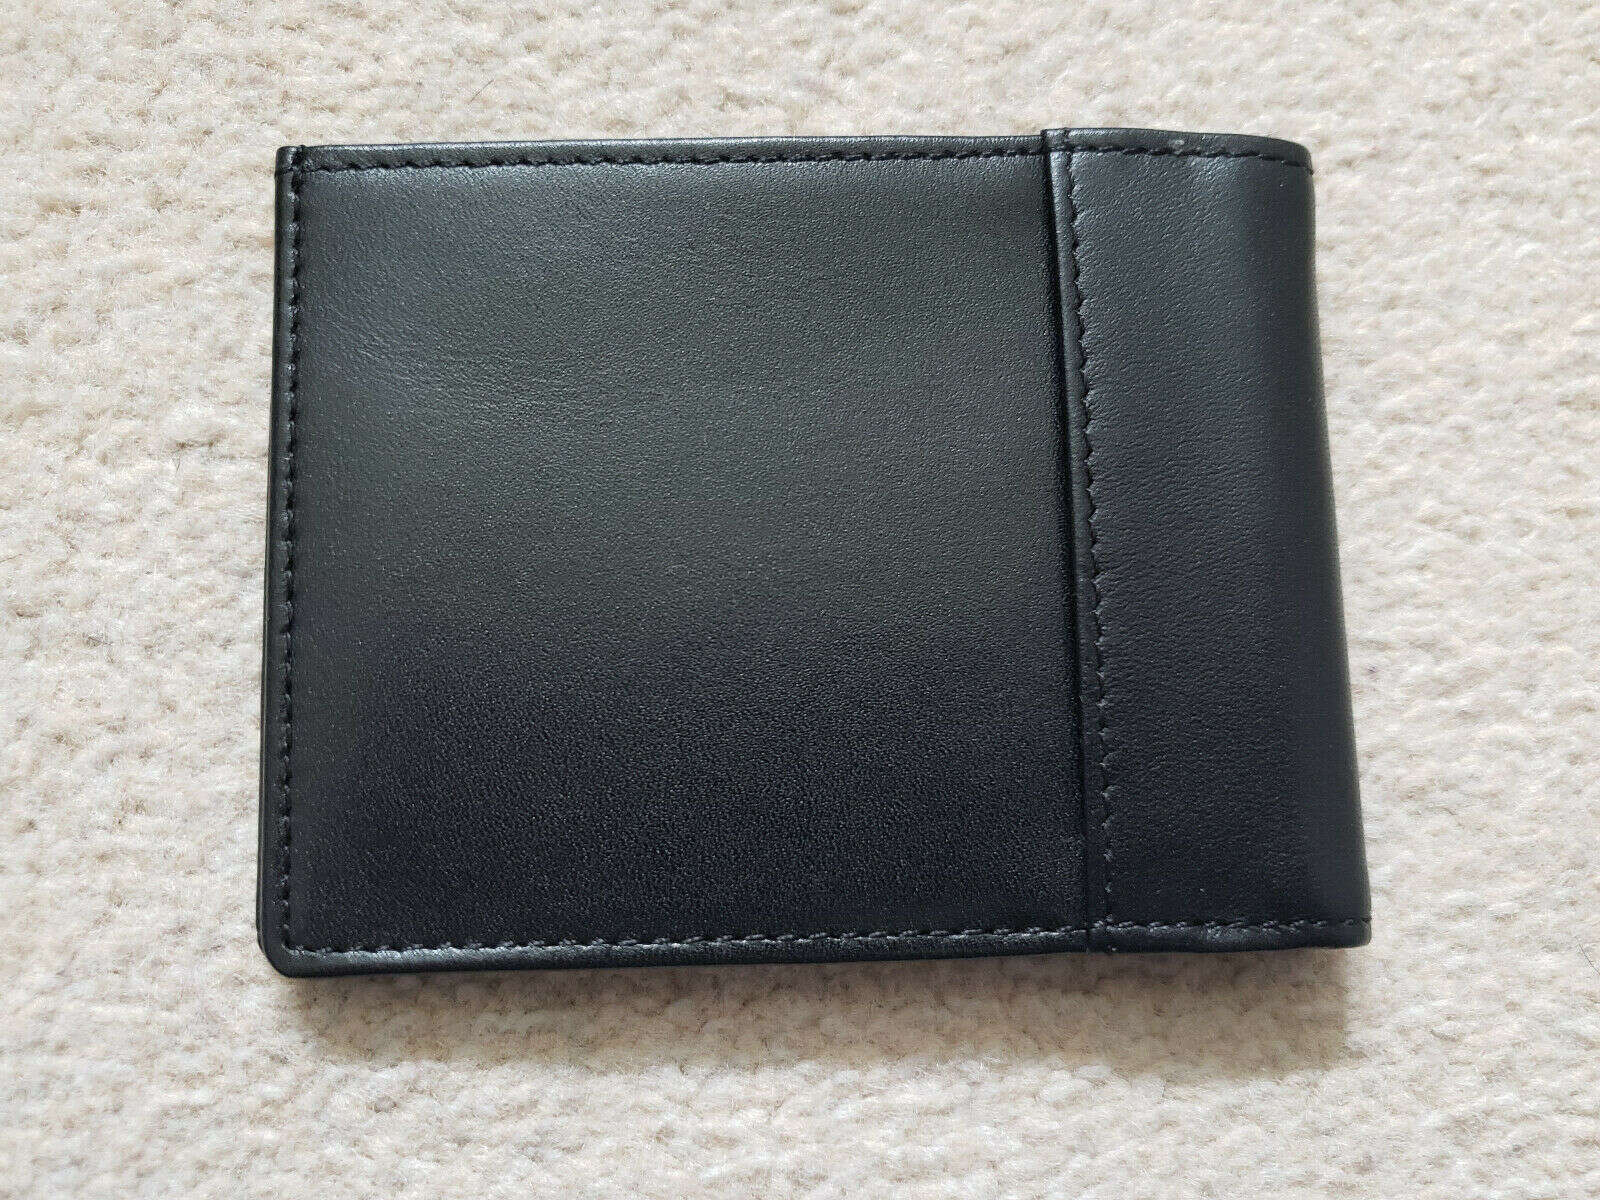 Minimal Wallet by Alan Wong & Pablo Amira shown closed back view